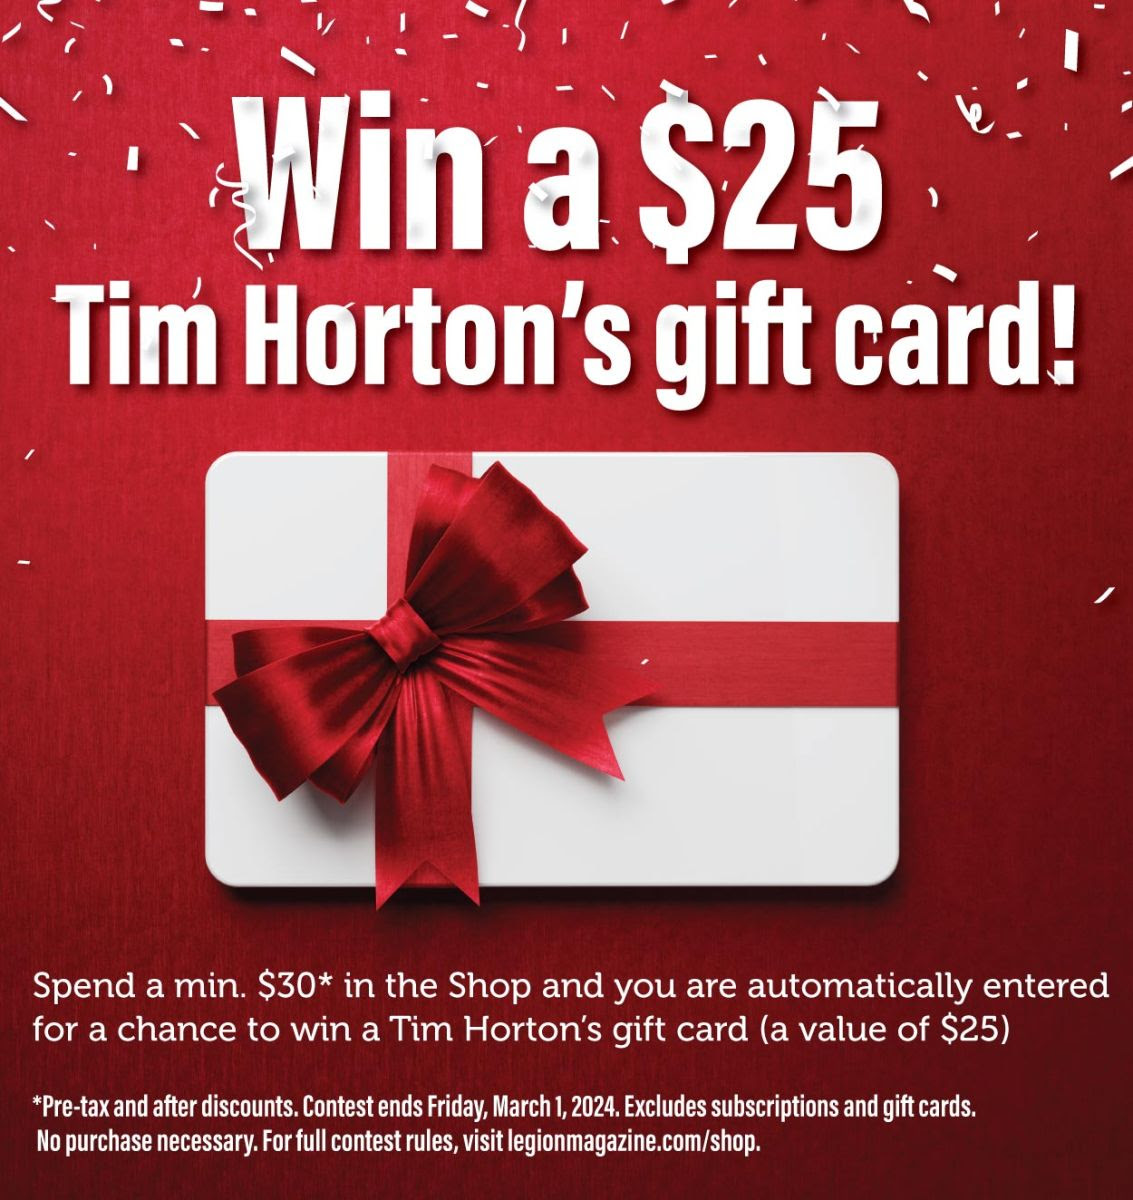 Win a Tim Horton’s gift card